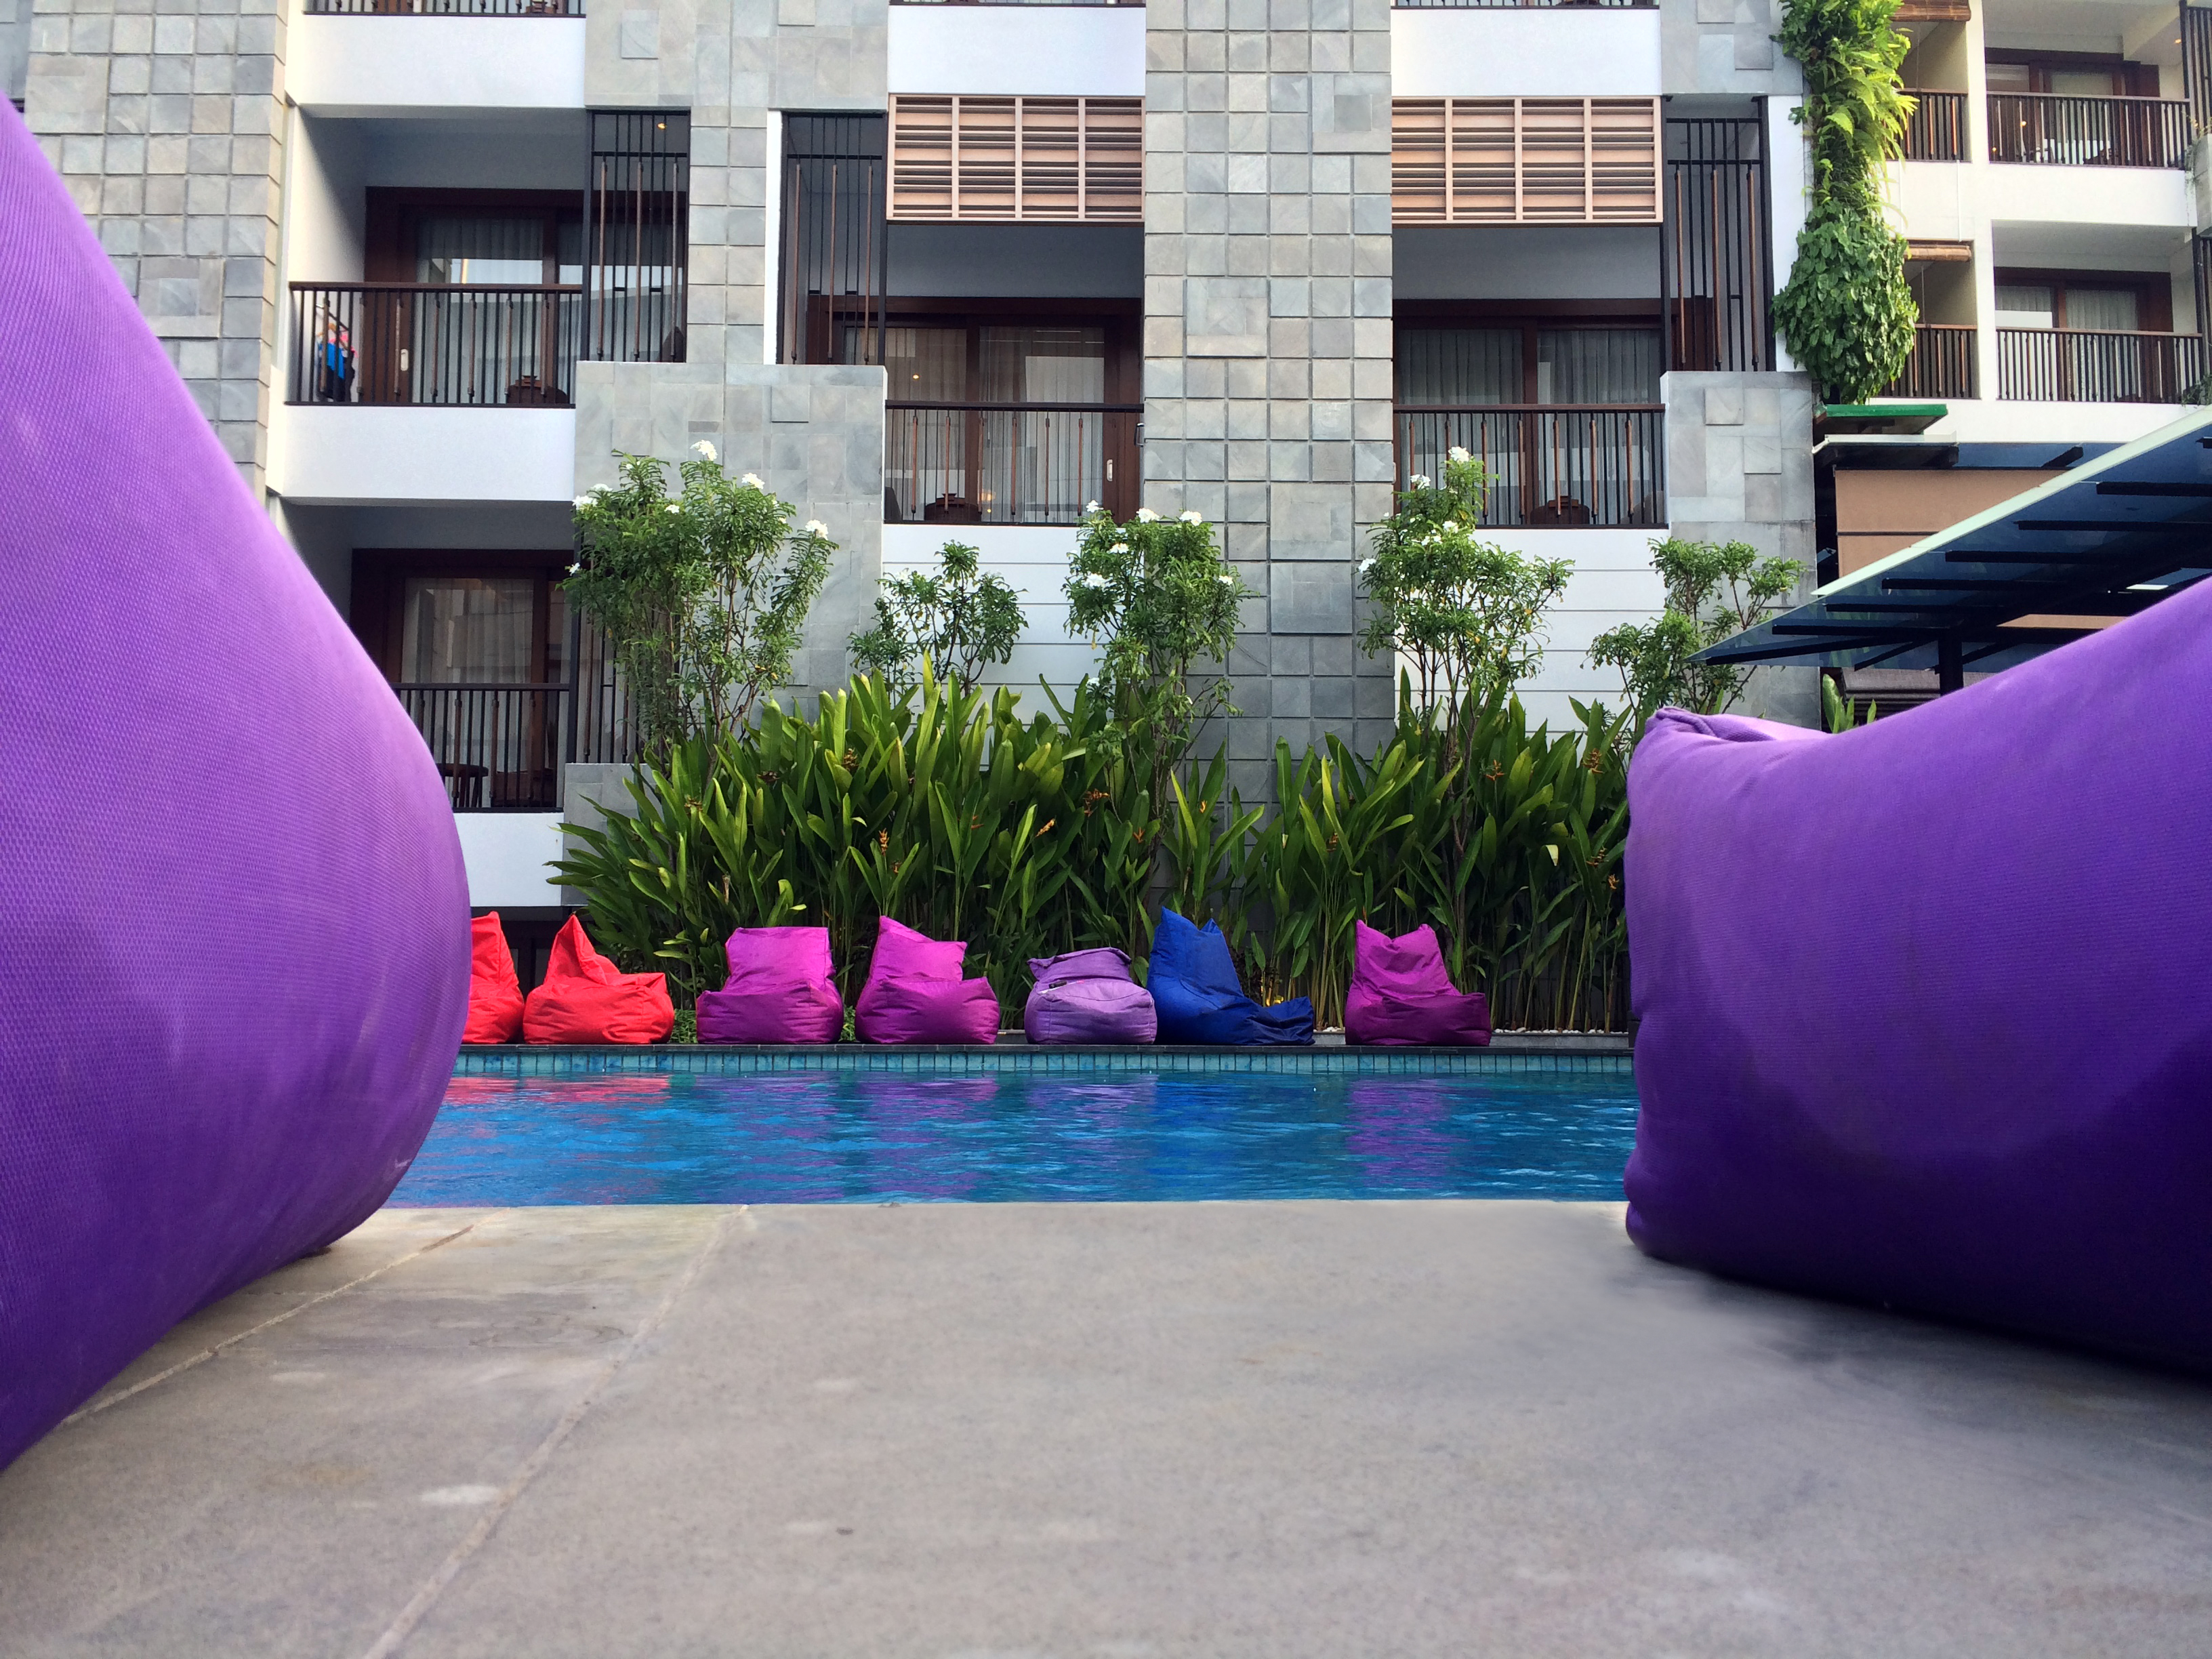 Courtyard by Marriott Bali Poolside.JPG